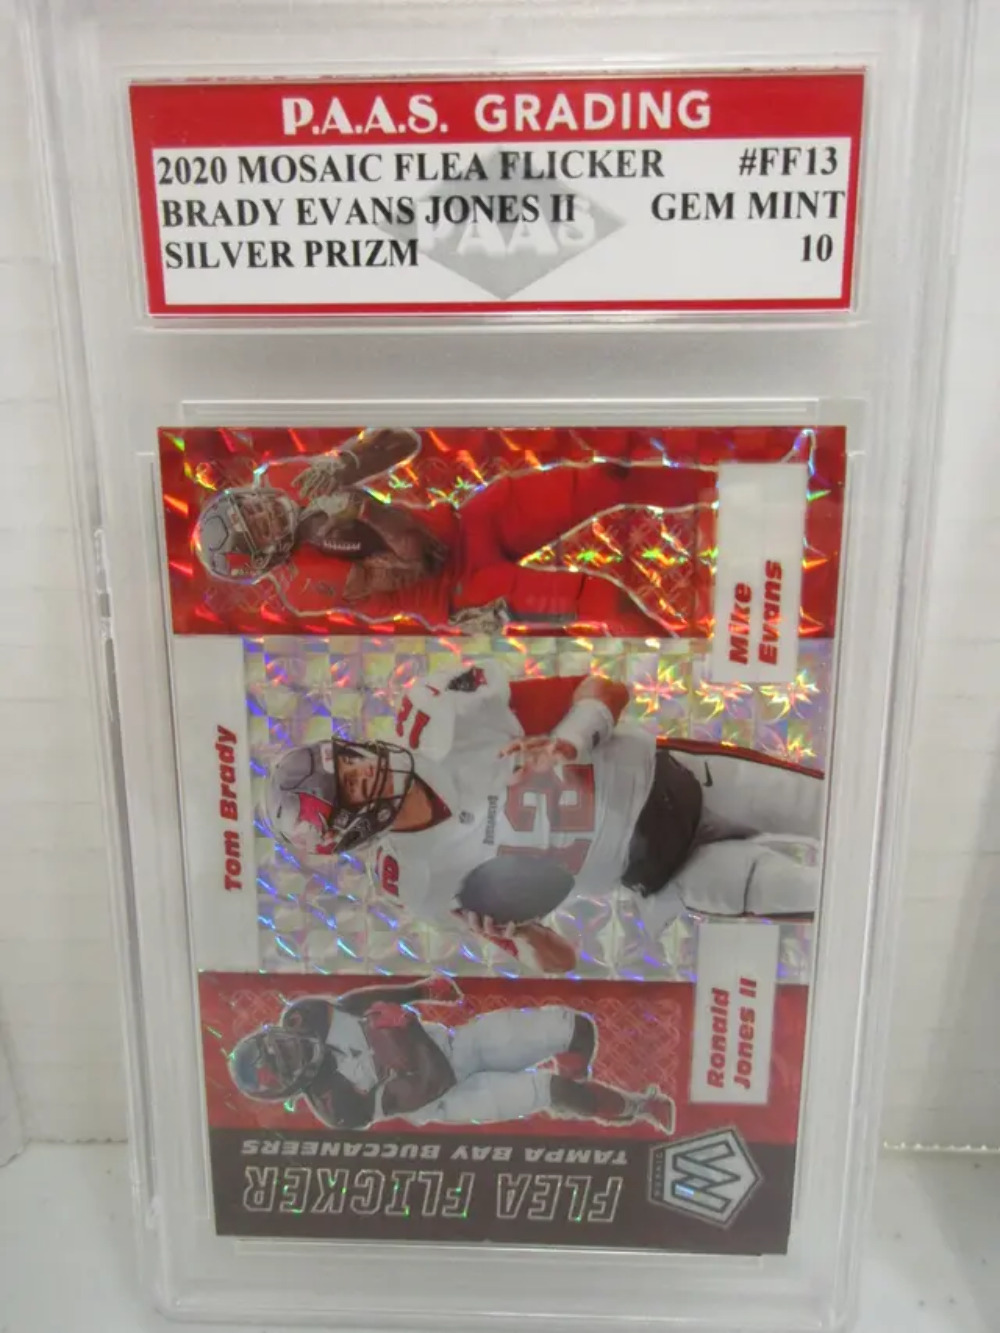 Tom Brady, Evans, Jones II 2020 Mosaic Flea Flicker Silver Prizm #FF13 graded PA